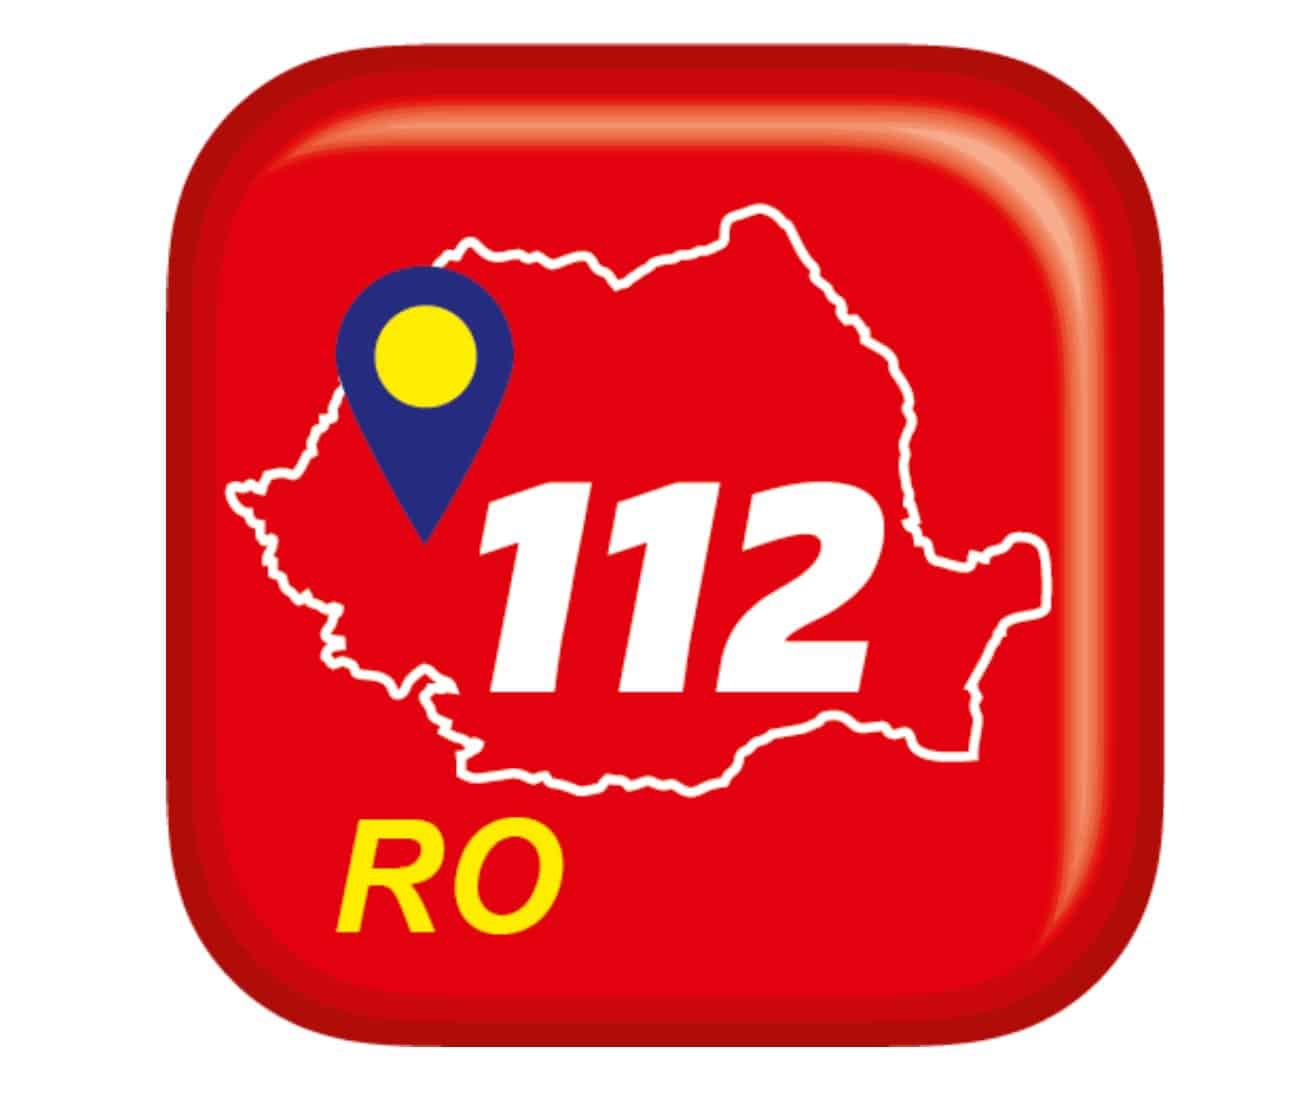 112 romania